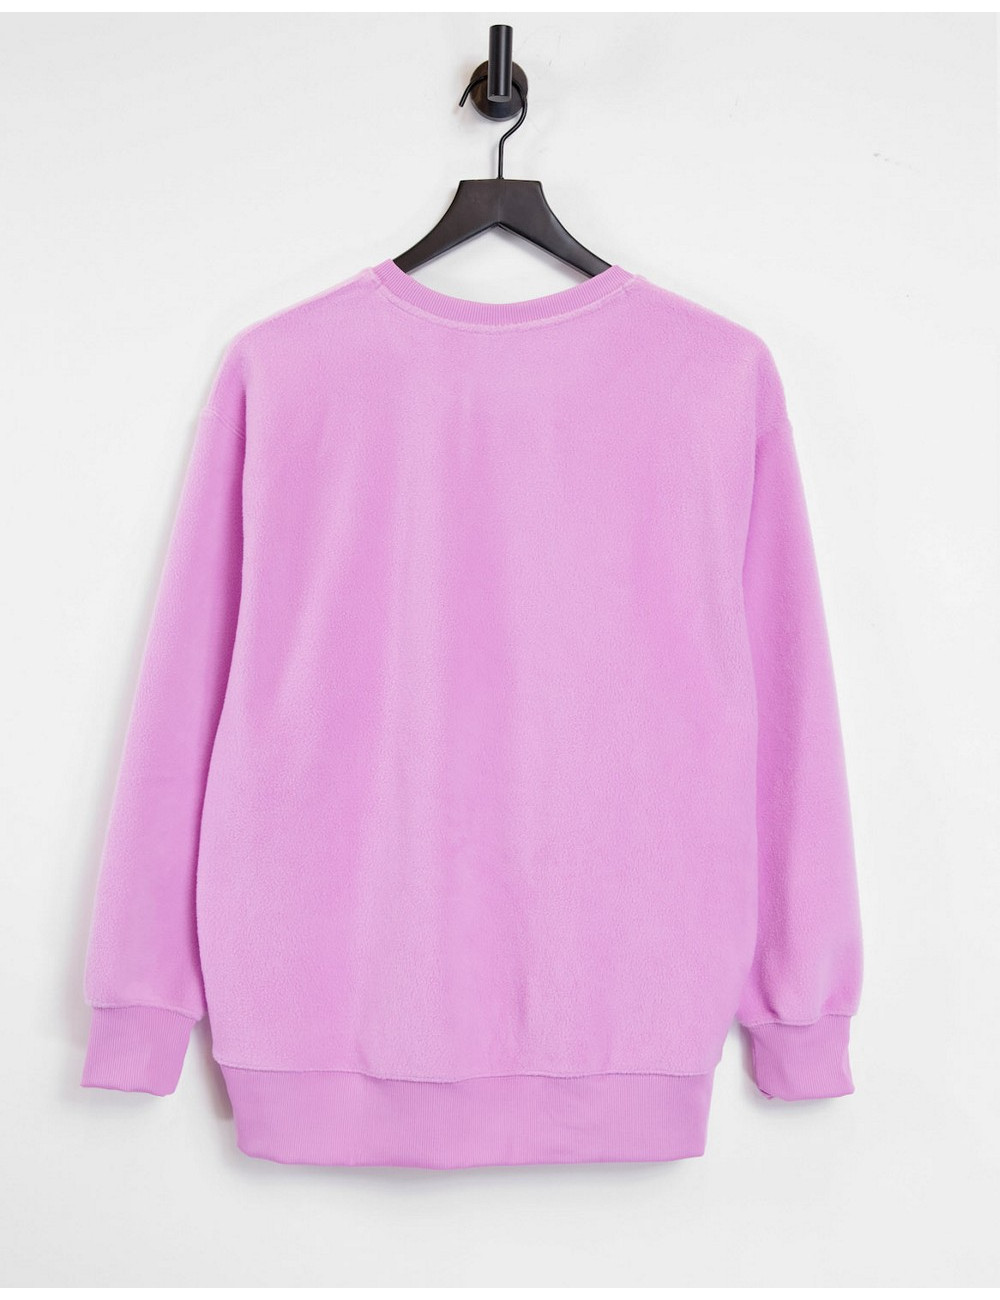 Nike Therma sweatshirt in pink